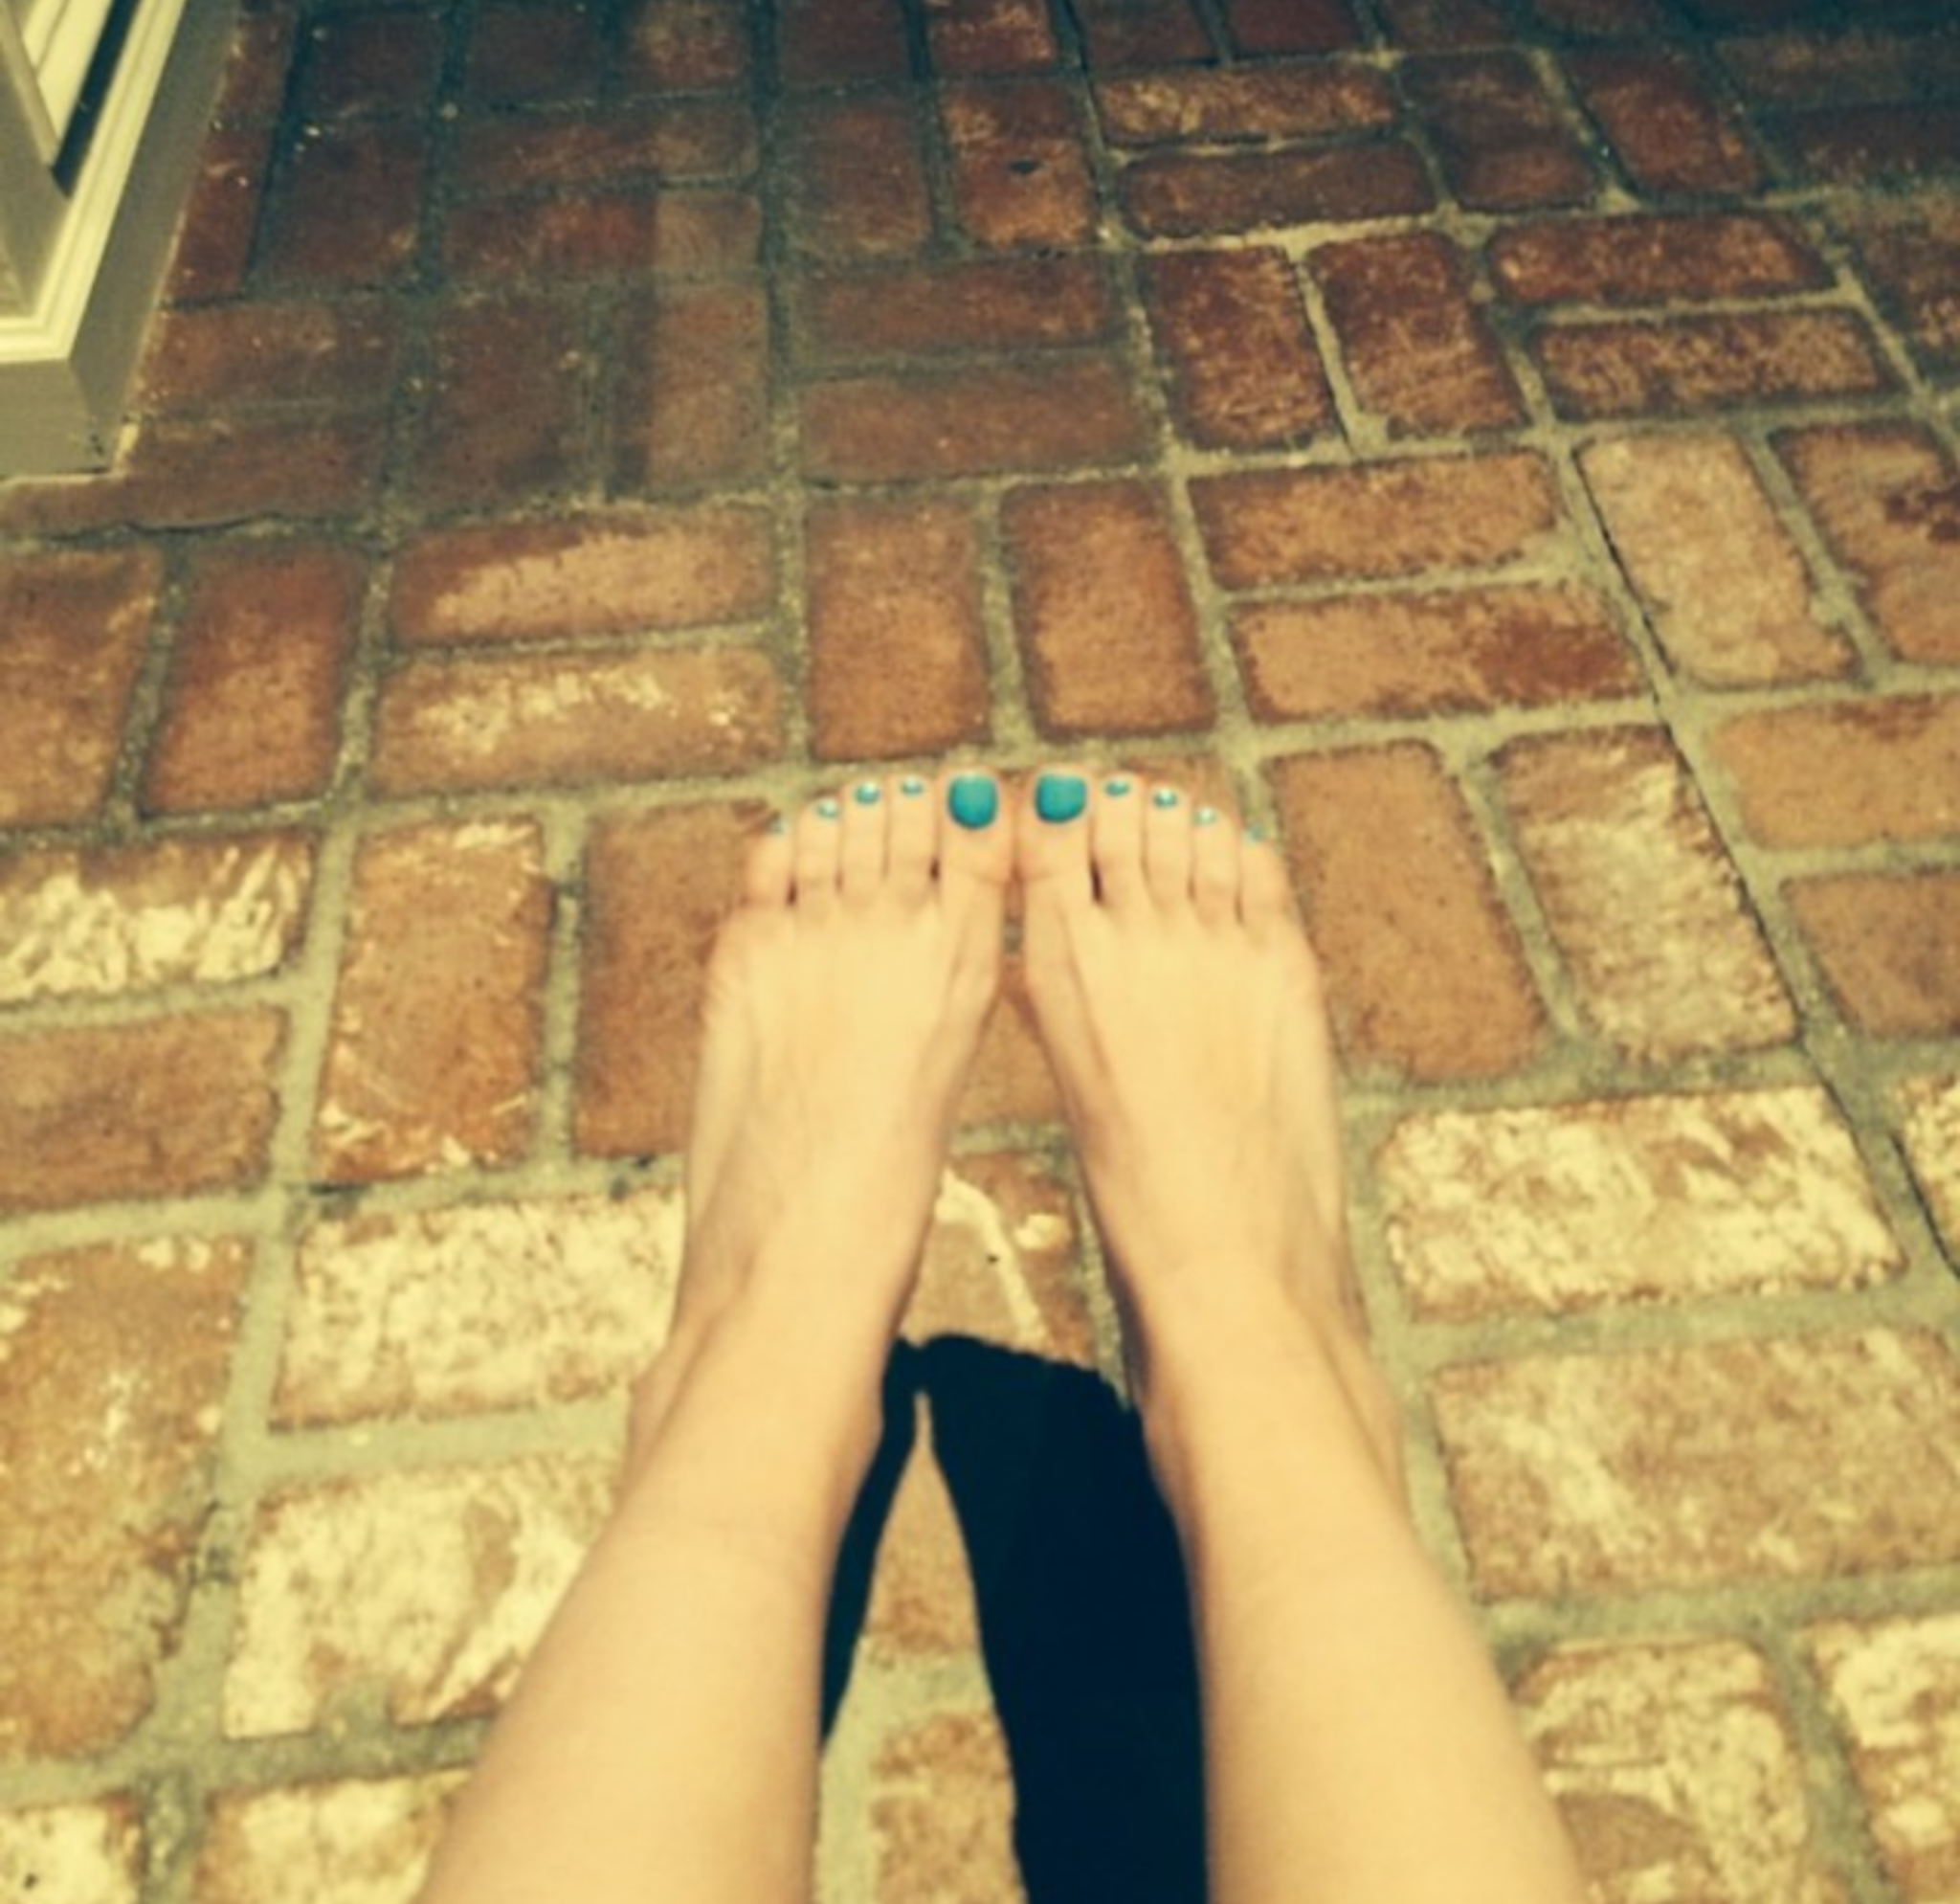 Hilary Duff Feet